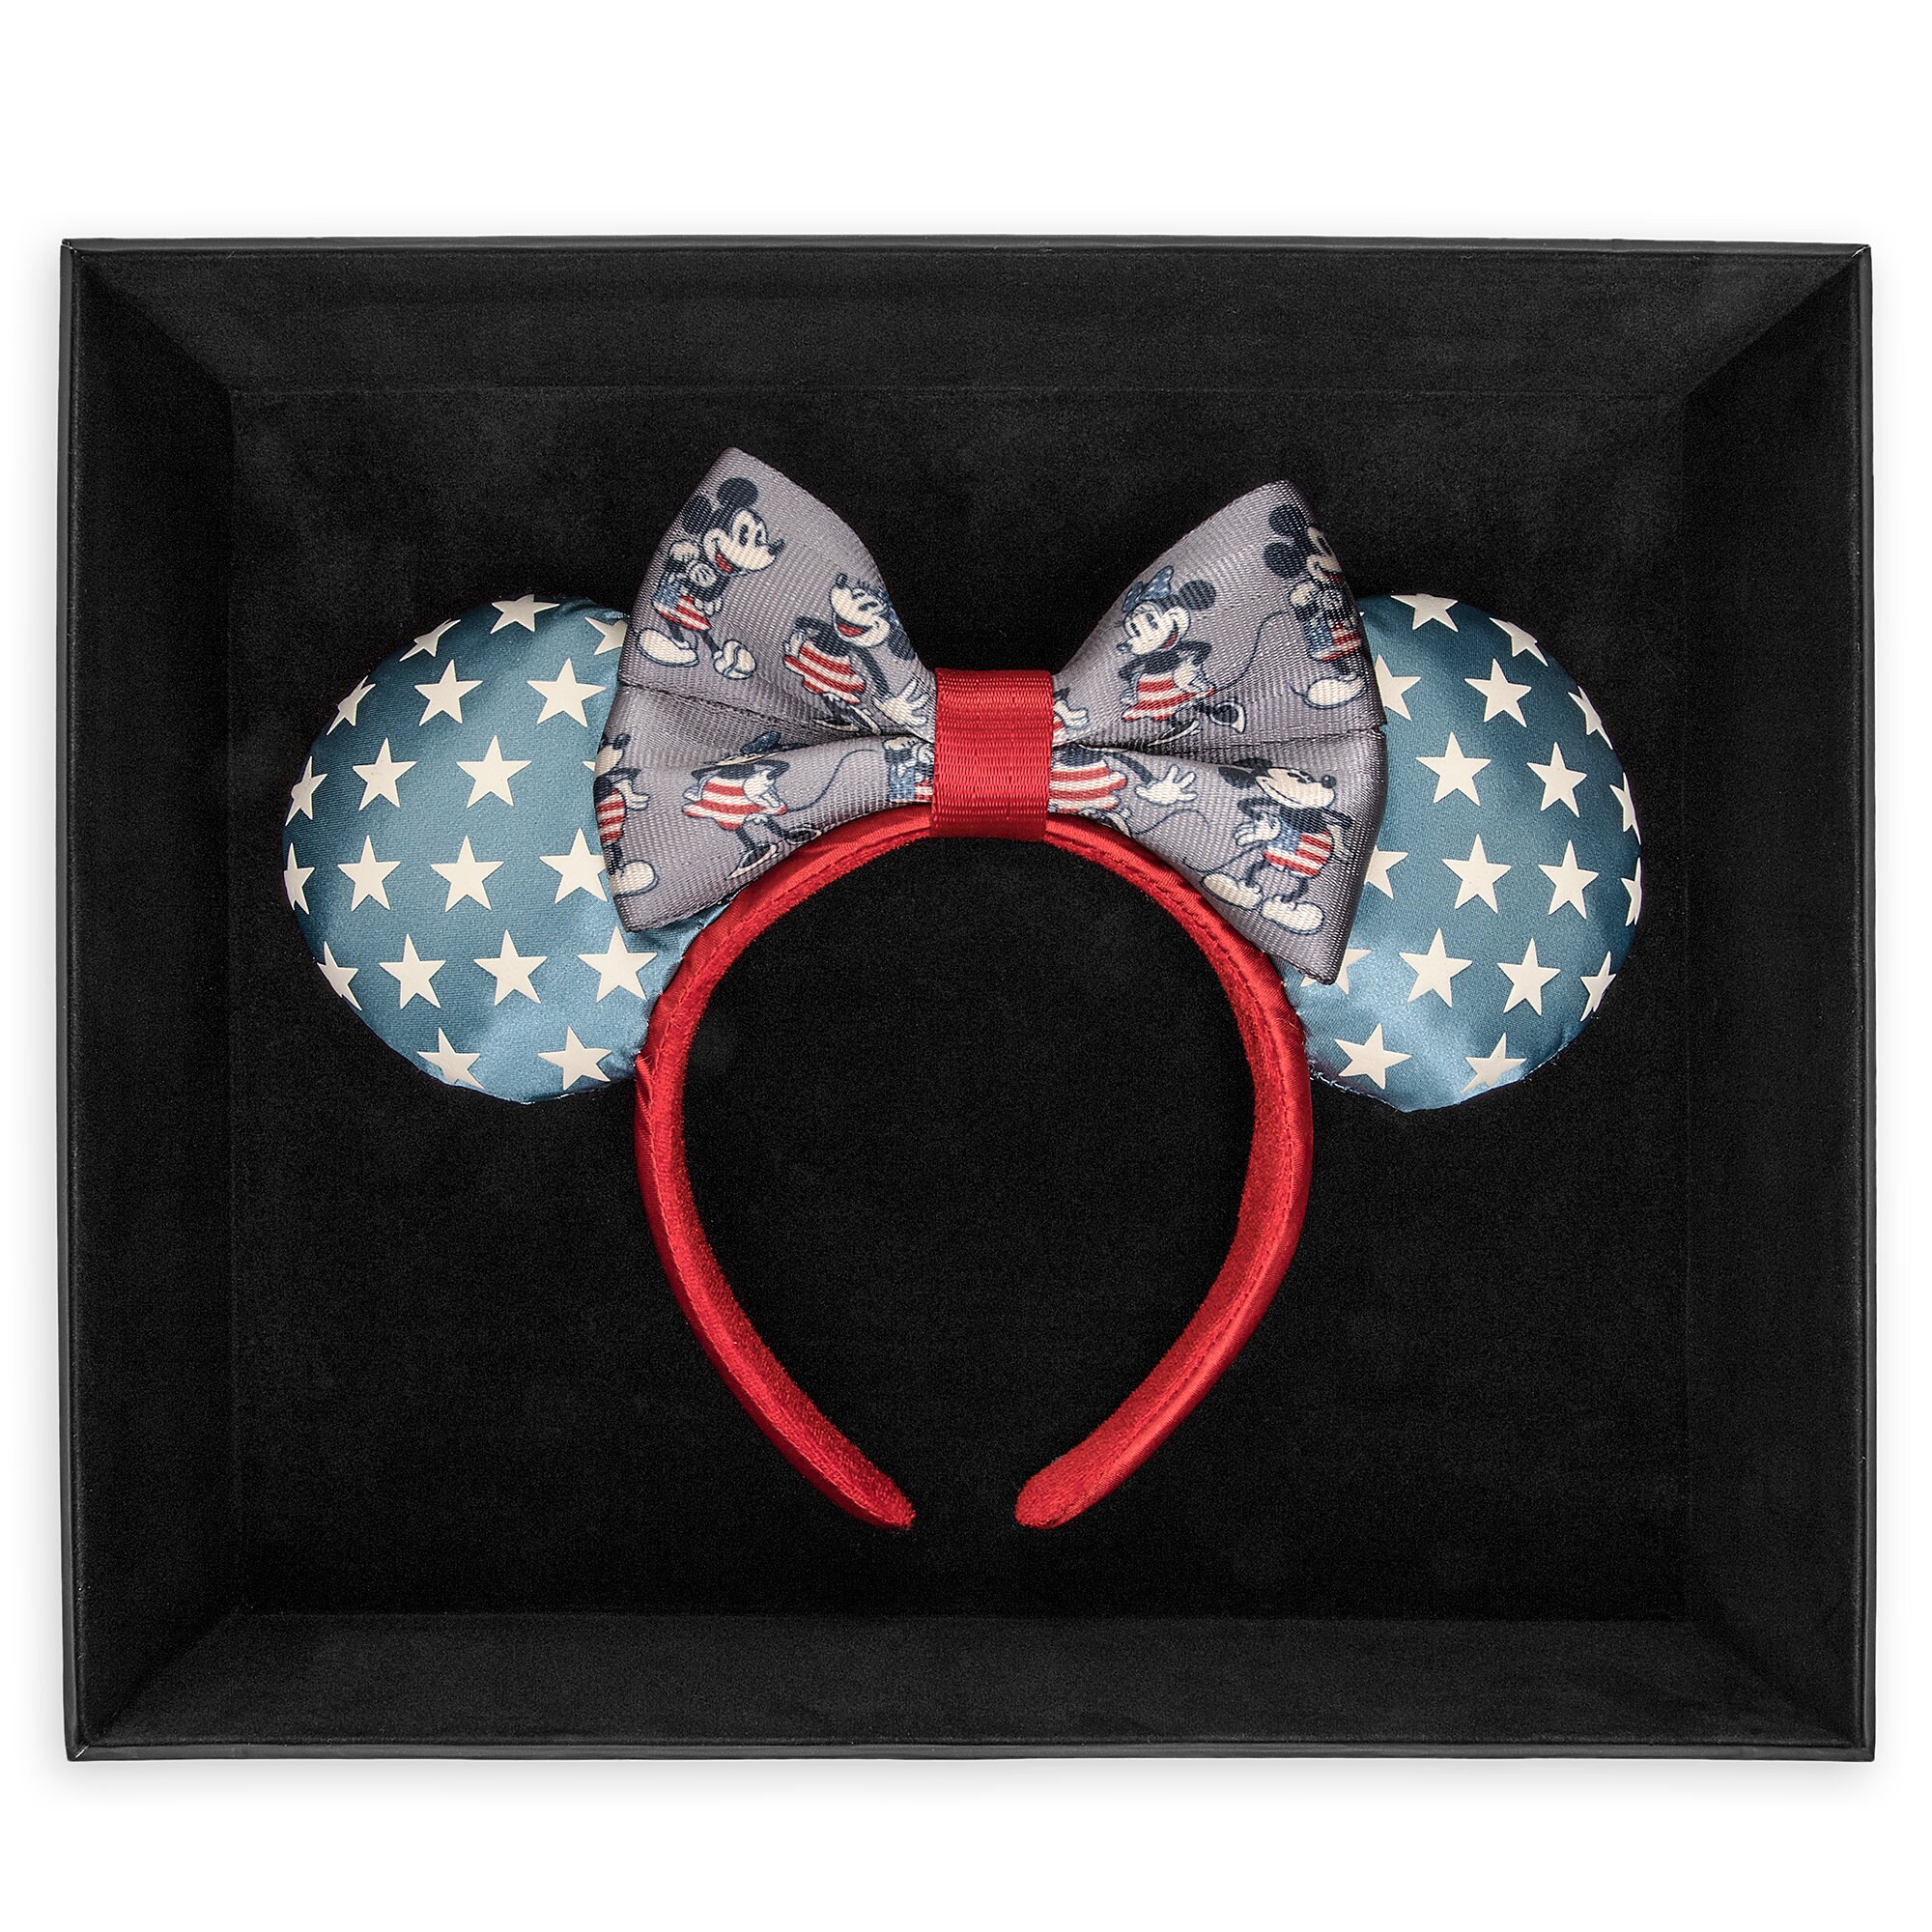 Mickey and Minnie Mouse Americana Ear Headband by Harveys - Limited Release